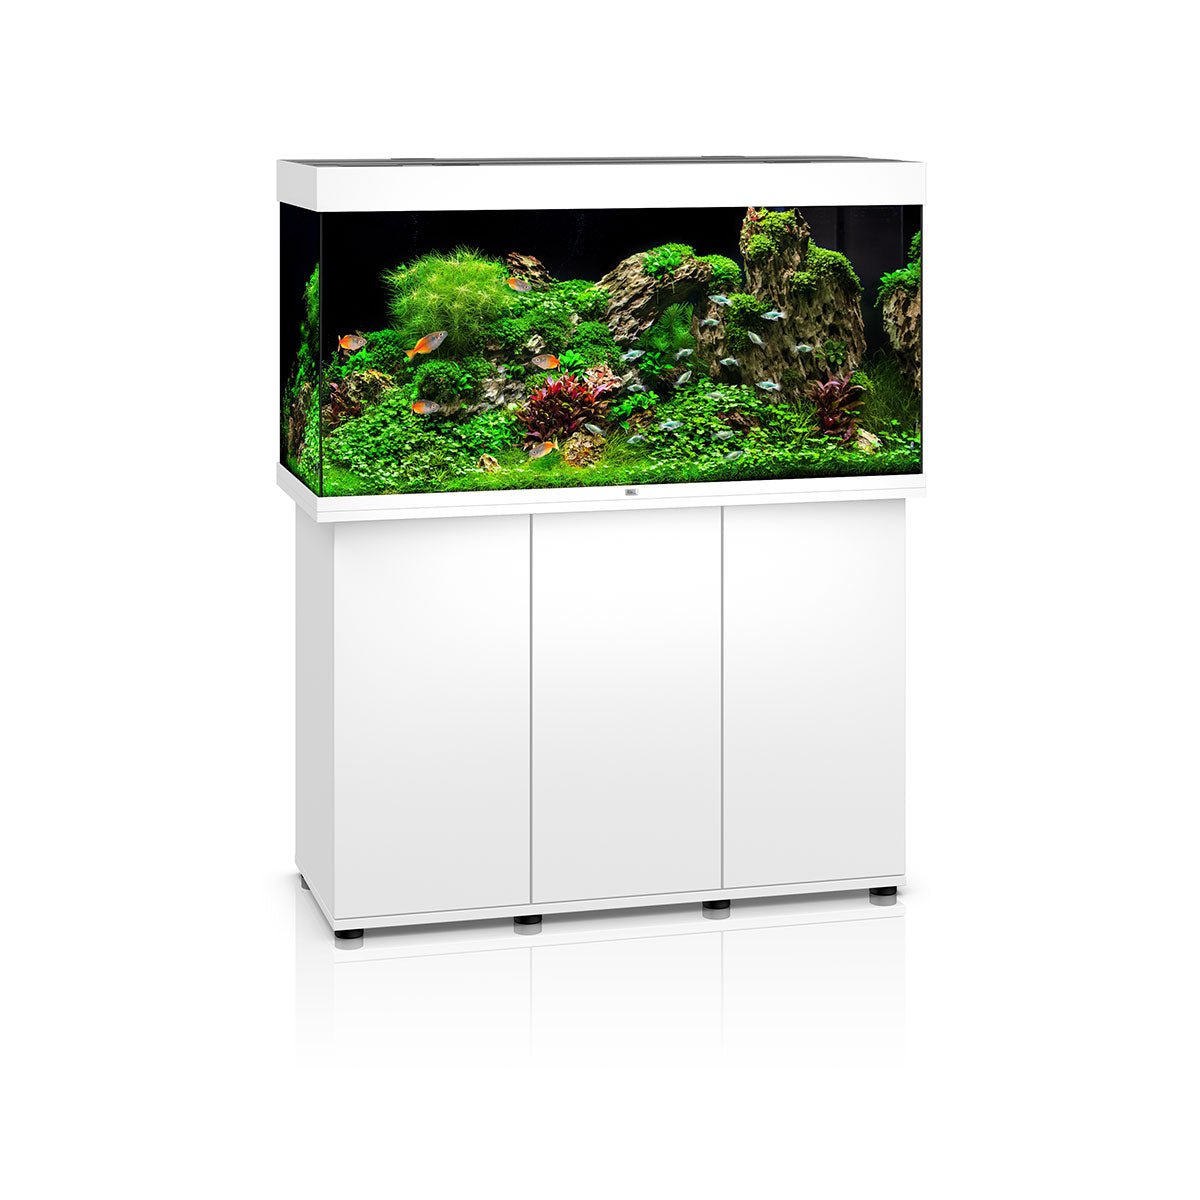 Juwel Rio 350 LED Aquarium and Cabinet (White) - Charterhouse Aquatics